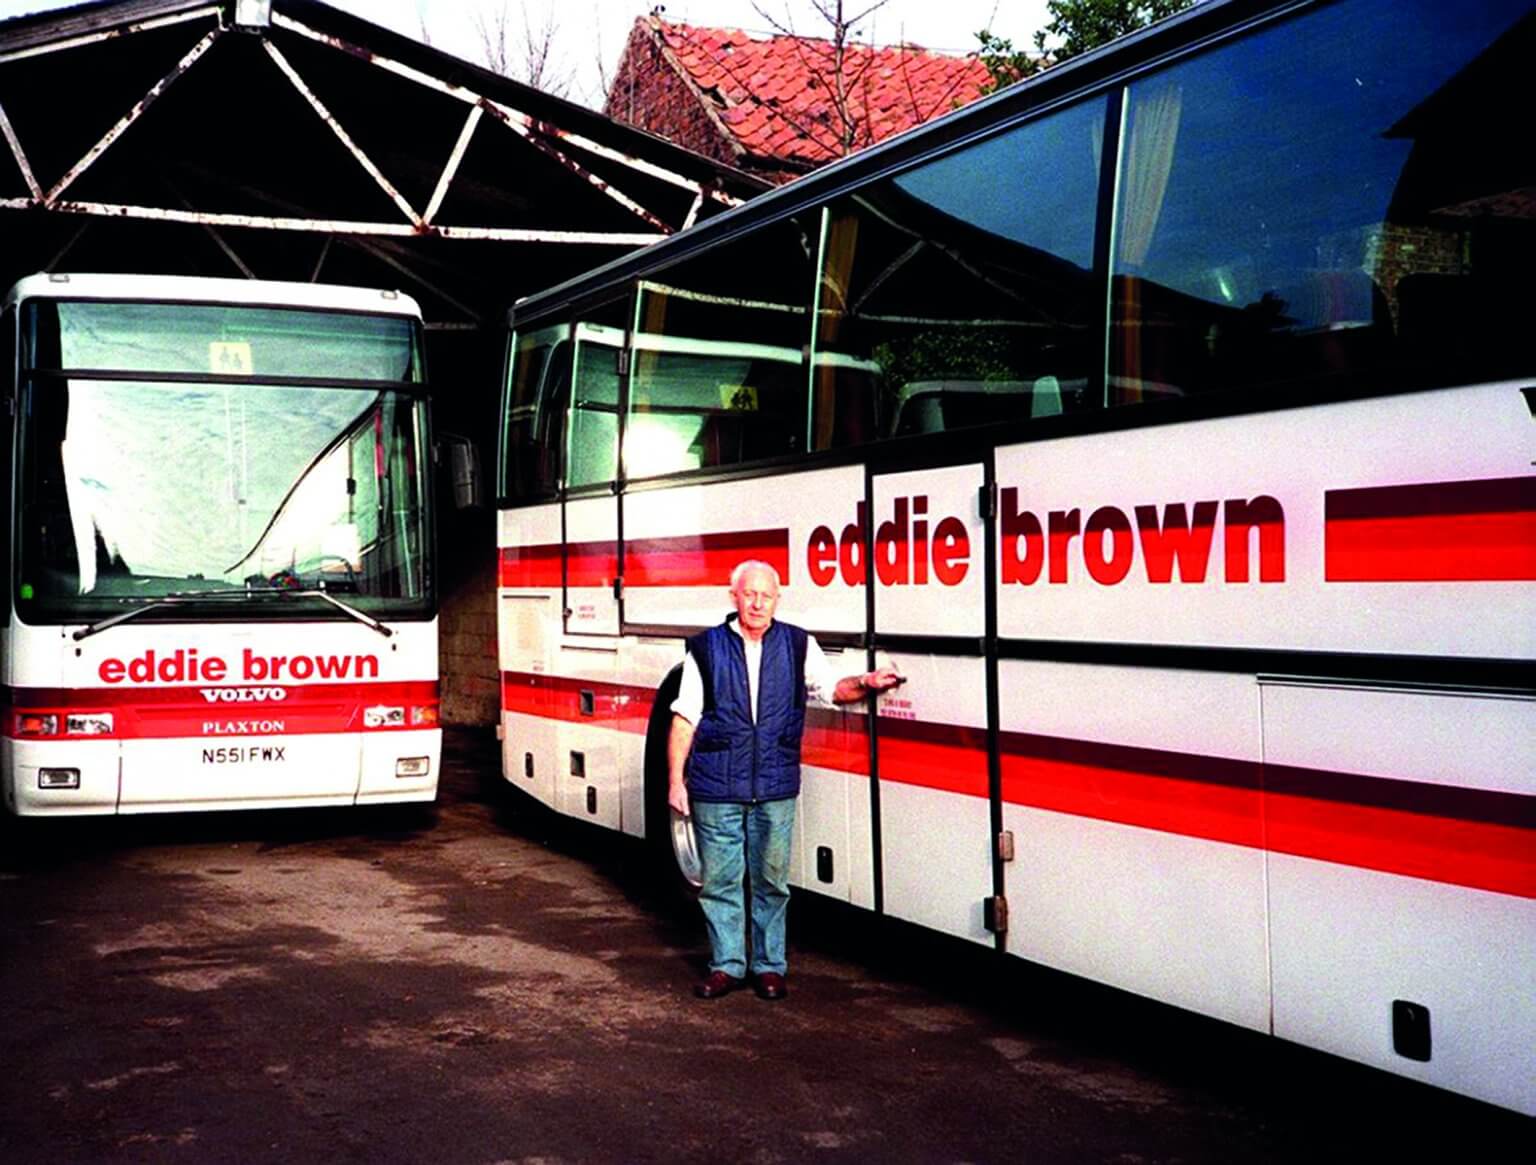 eddie brown coach tours